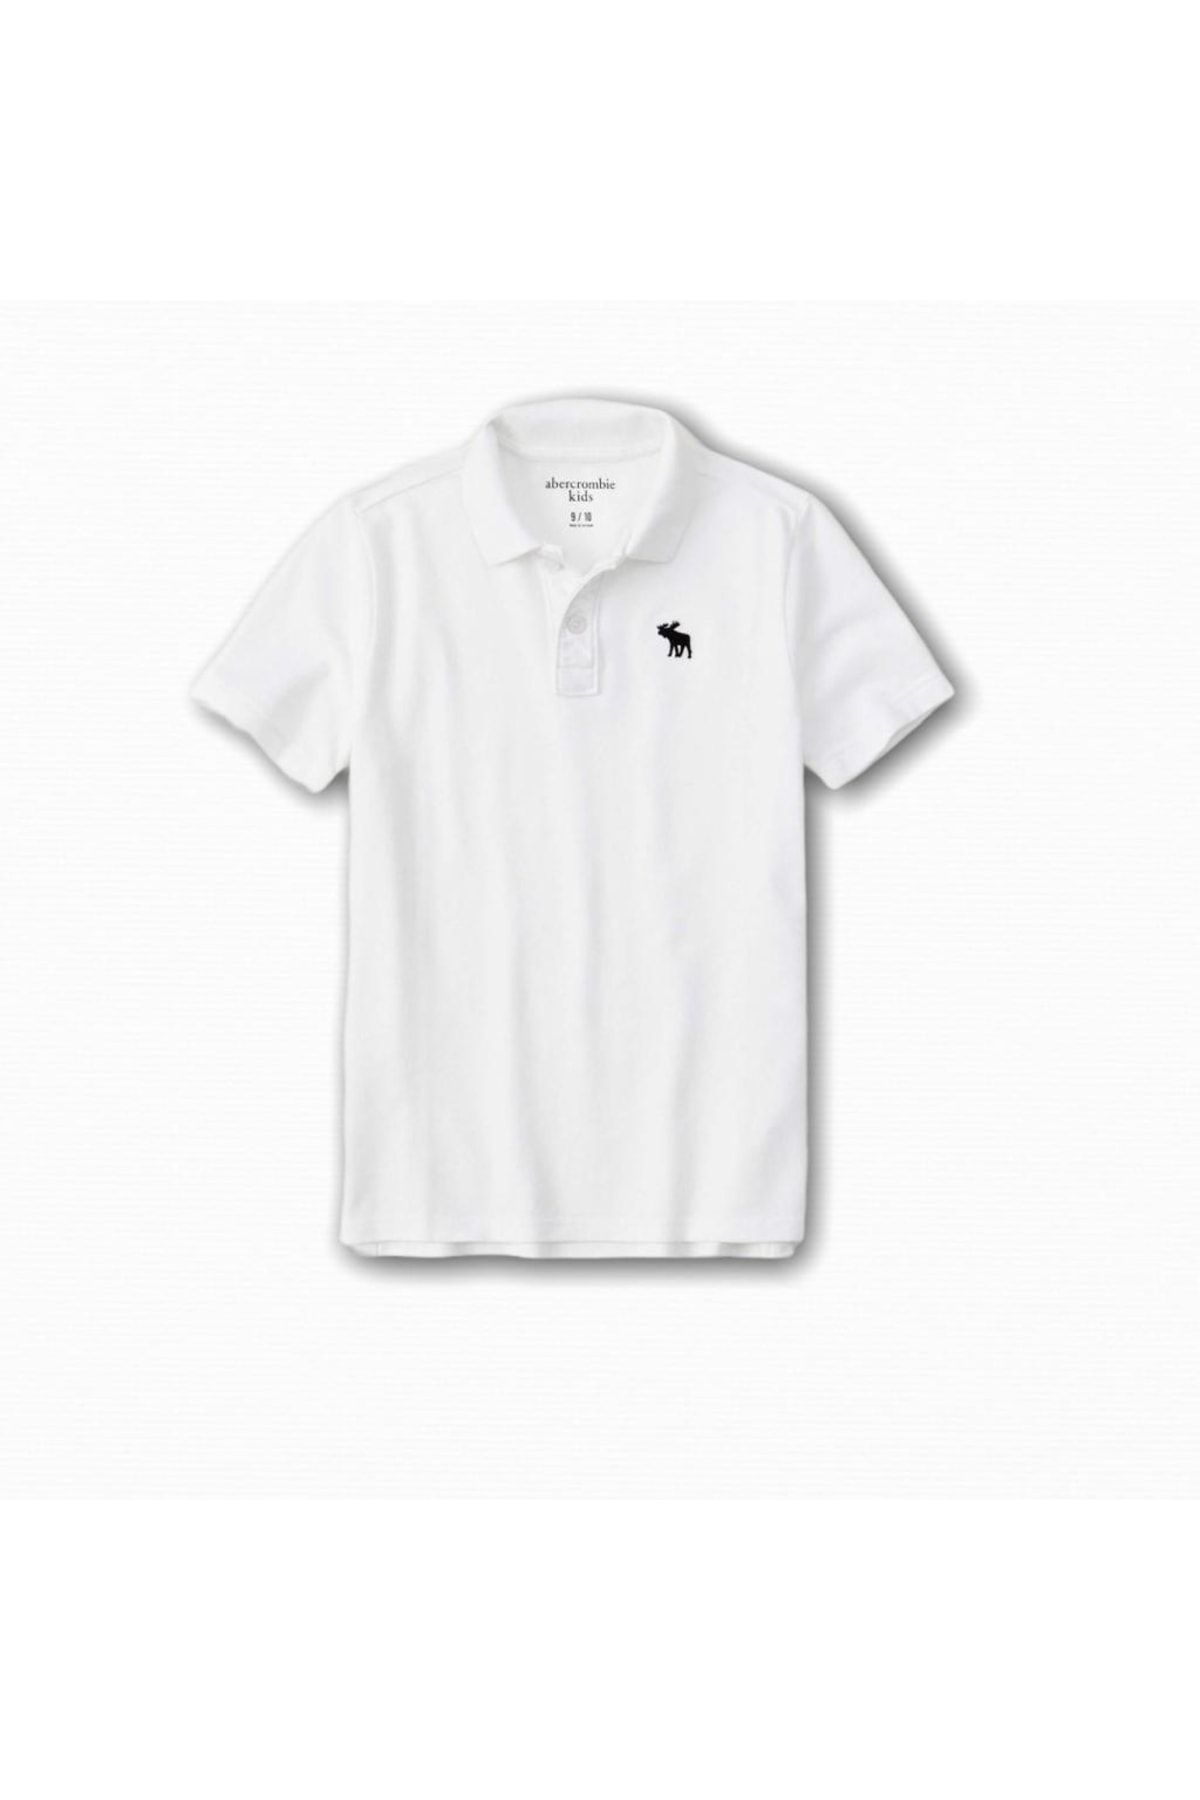 Abercrombie Erkek Çocuk Beyaz Icon Polo Yaka T-shirt